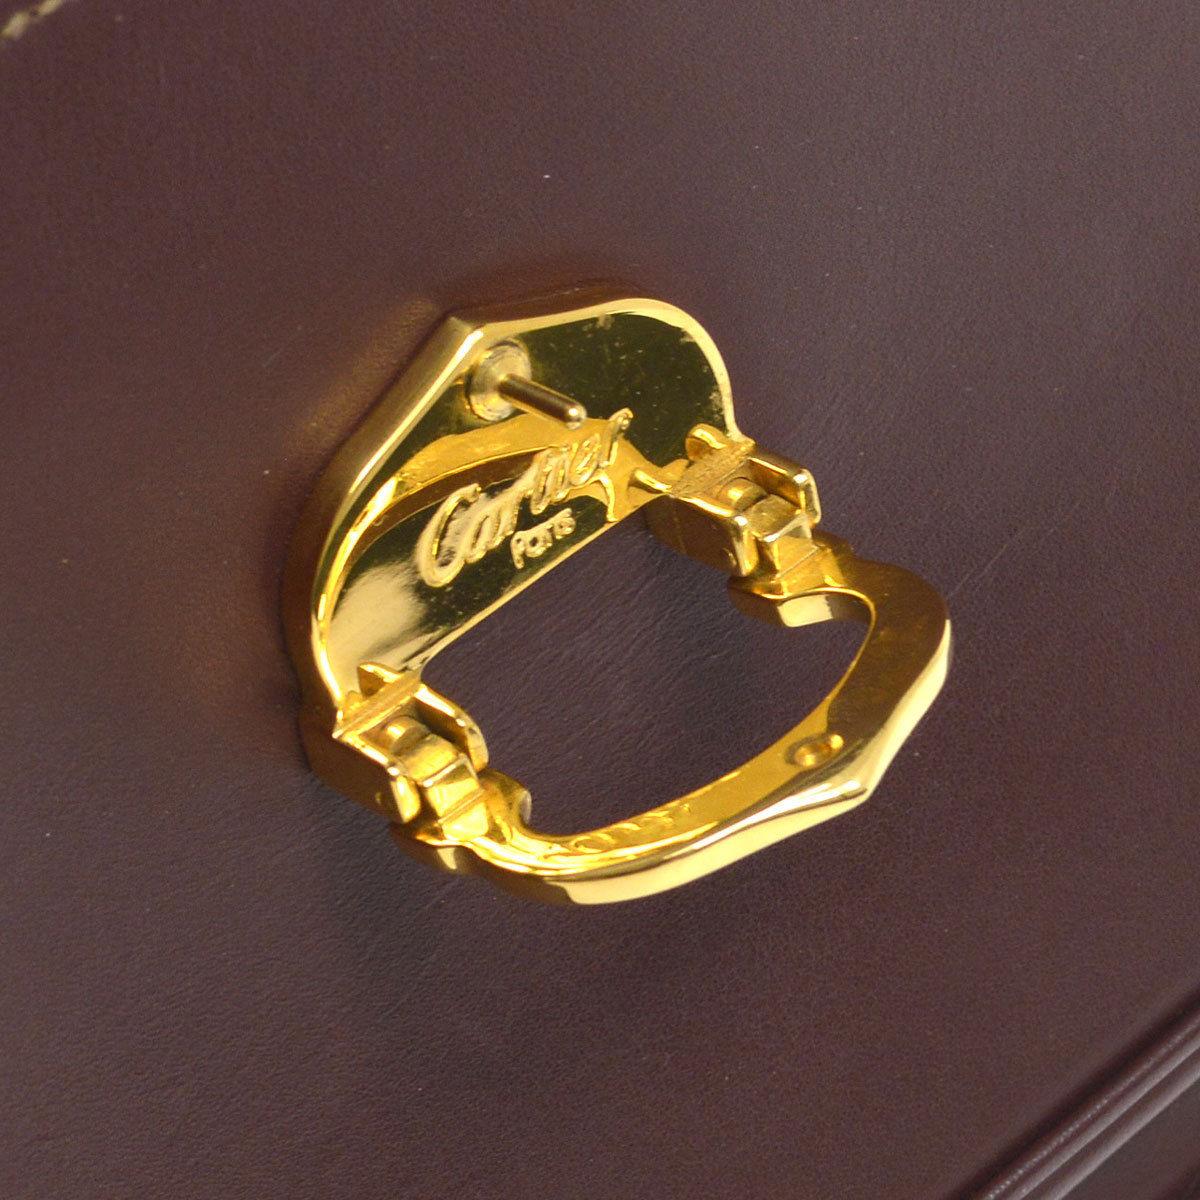 Cartier Burgundy Wine Leather Saddle Top Handle Evening Shoulder Flap Bag

Leather
Gold tone hardware
Flip lock closure 
Woven lining
Adjustable strap drop 9.5